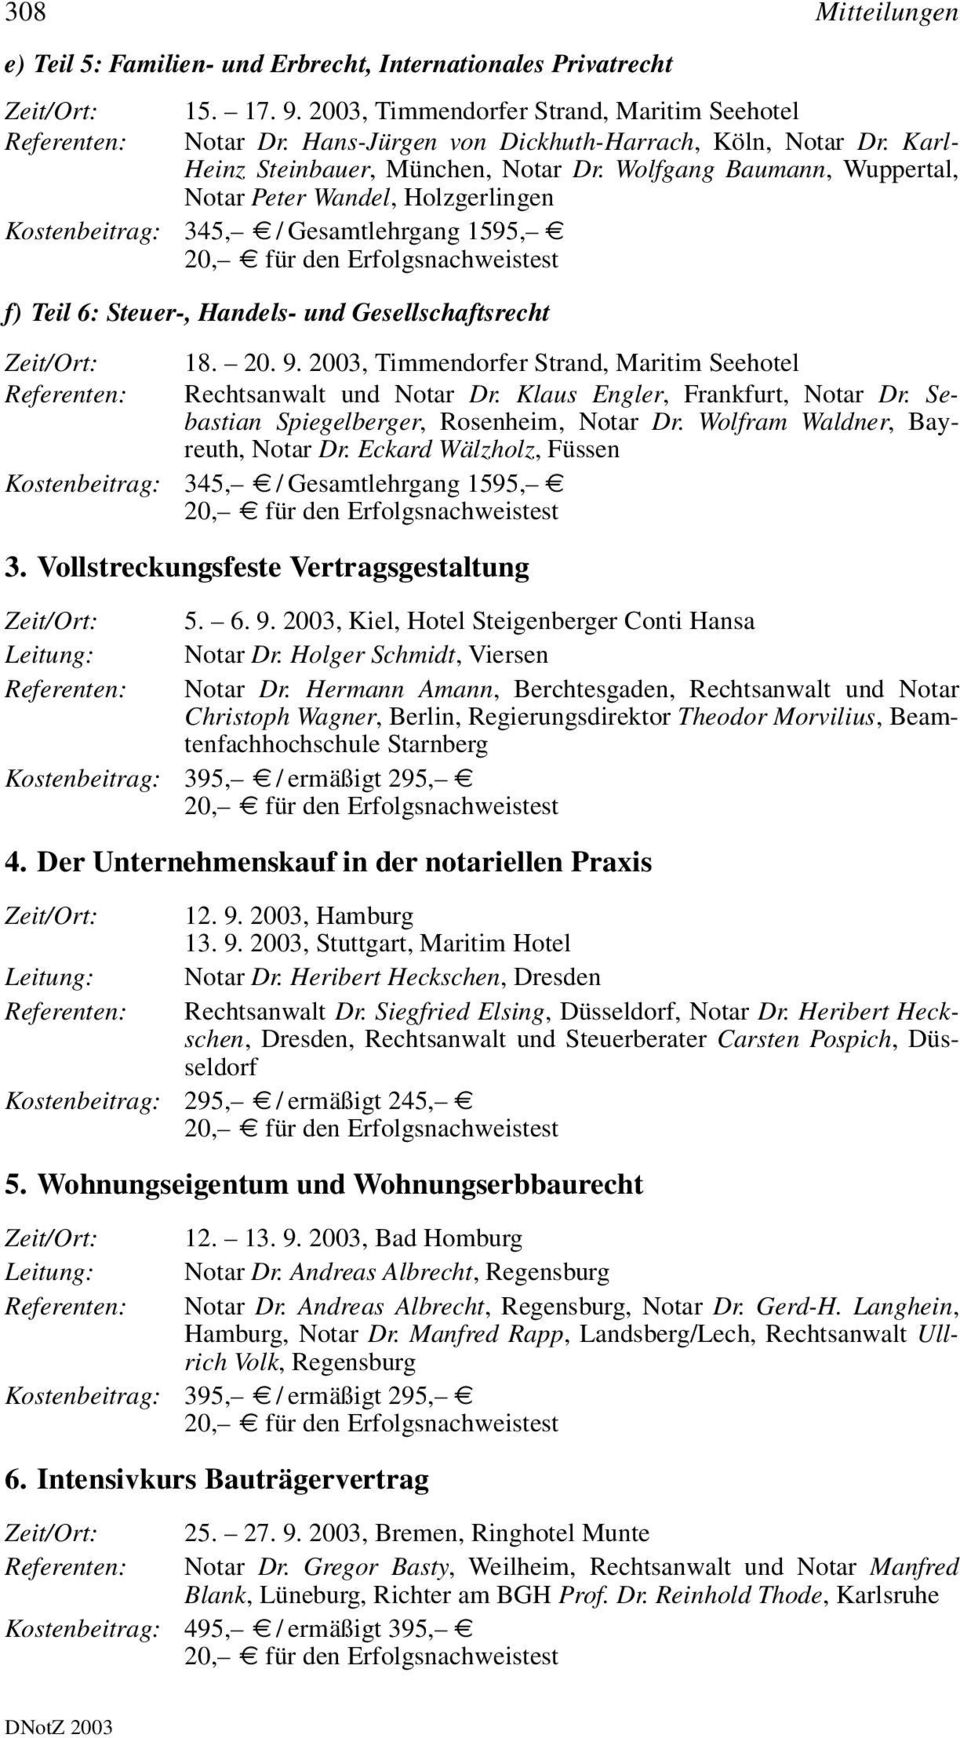 2003, Timmendorfer Strand, Maritim Seehotel Rechtsanwalt und Notar Dr. Klaus Engler, Frankfurt, Notar Dr. Sebastian Spiegelberger, Rosenheim, Notar Dr. Wolfram Waldner, Bayreuth, Notar Dr.